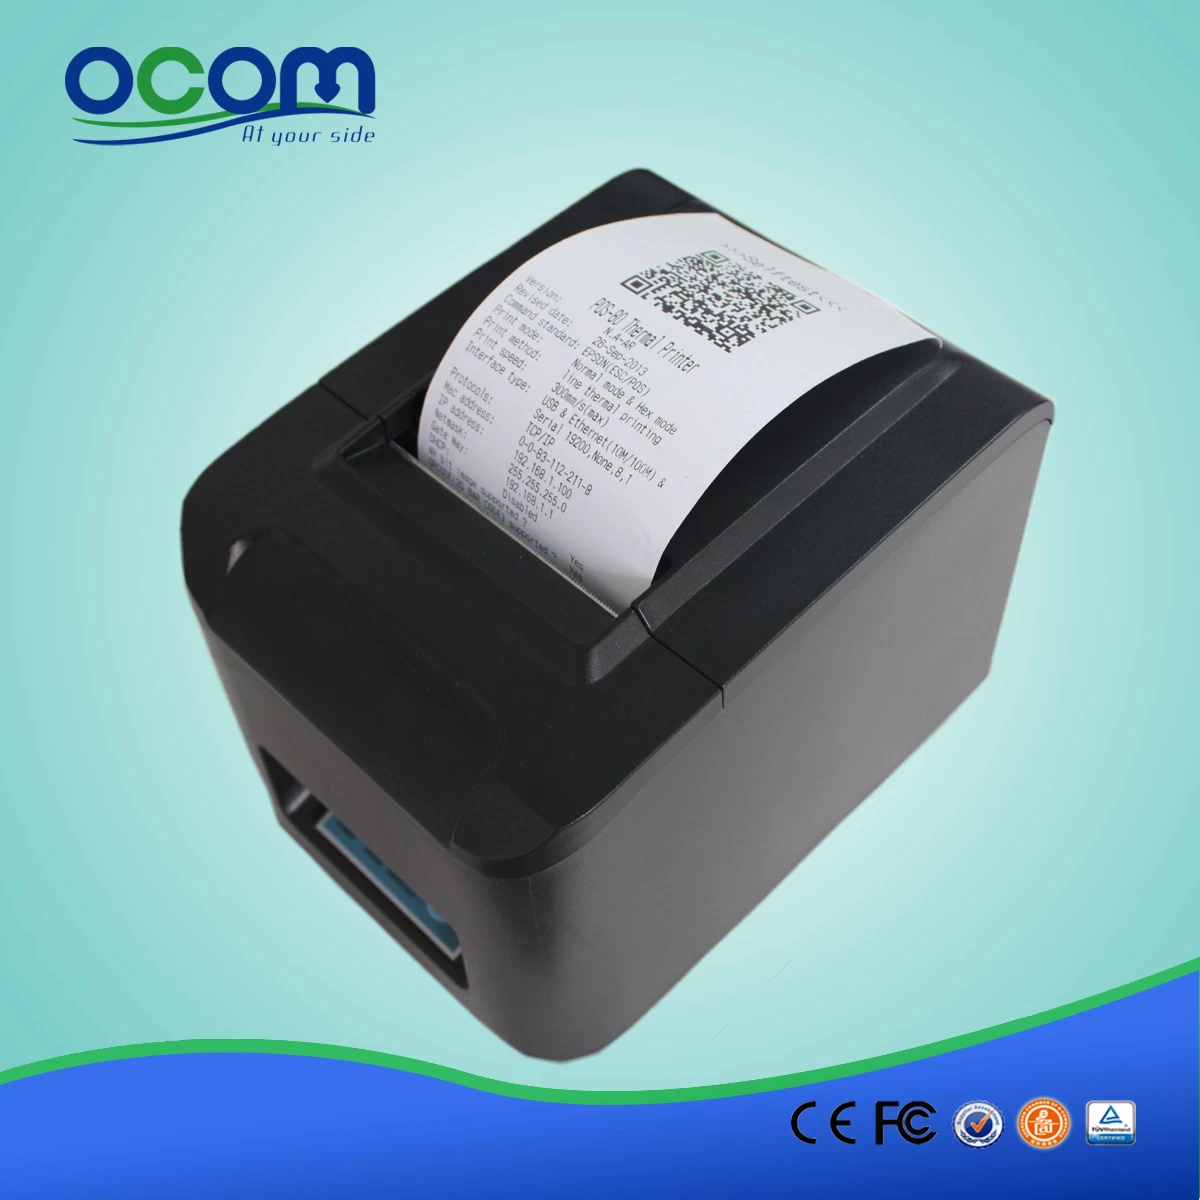 (OCPP-808-W) 3" High Speed Auto-cutter WIFI Thermal Receipt Printer